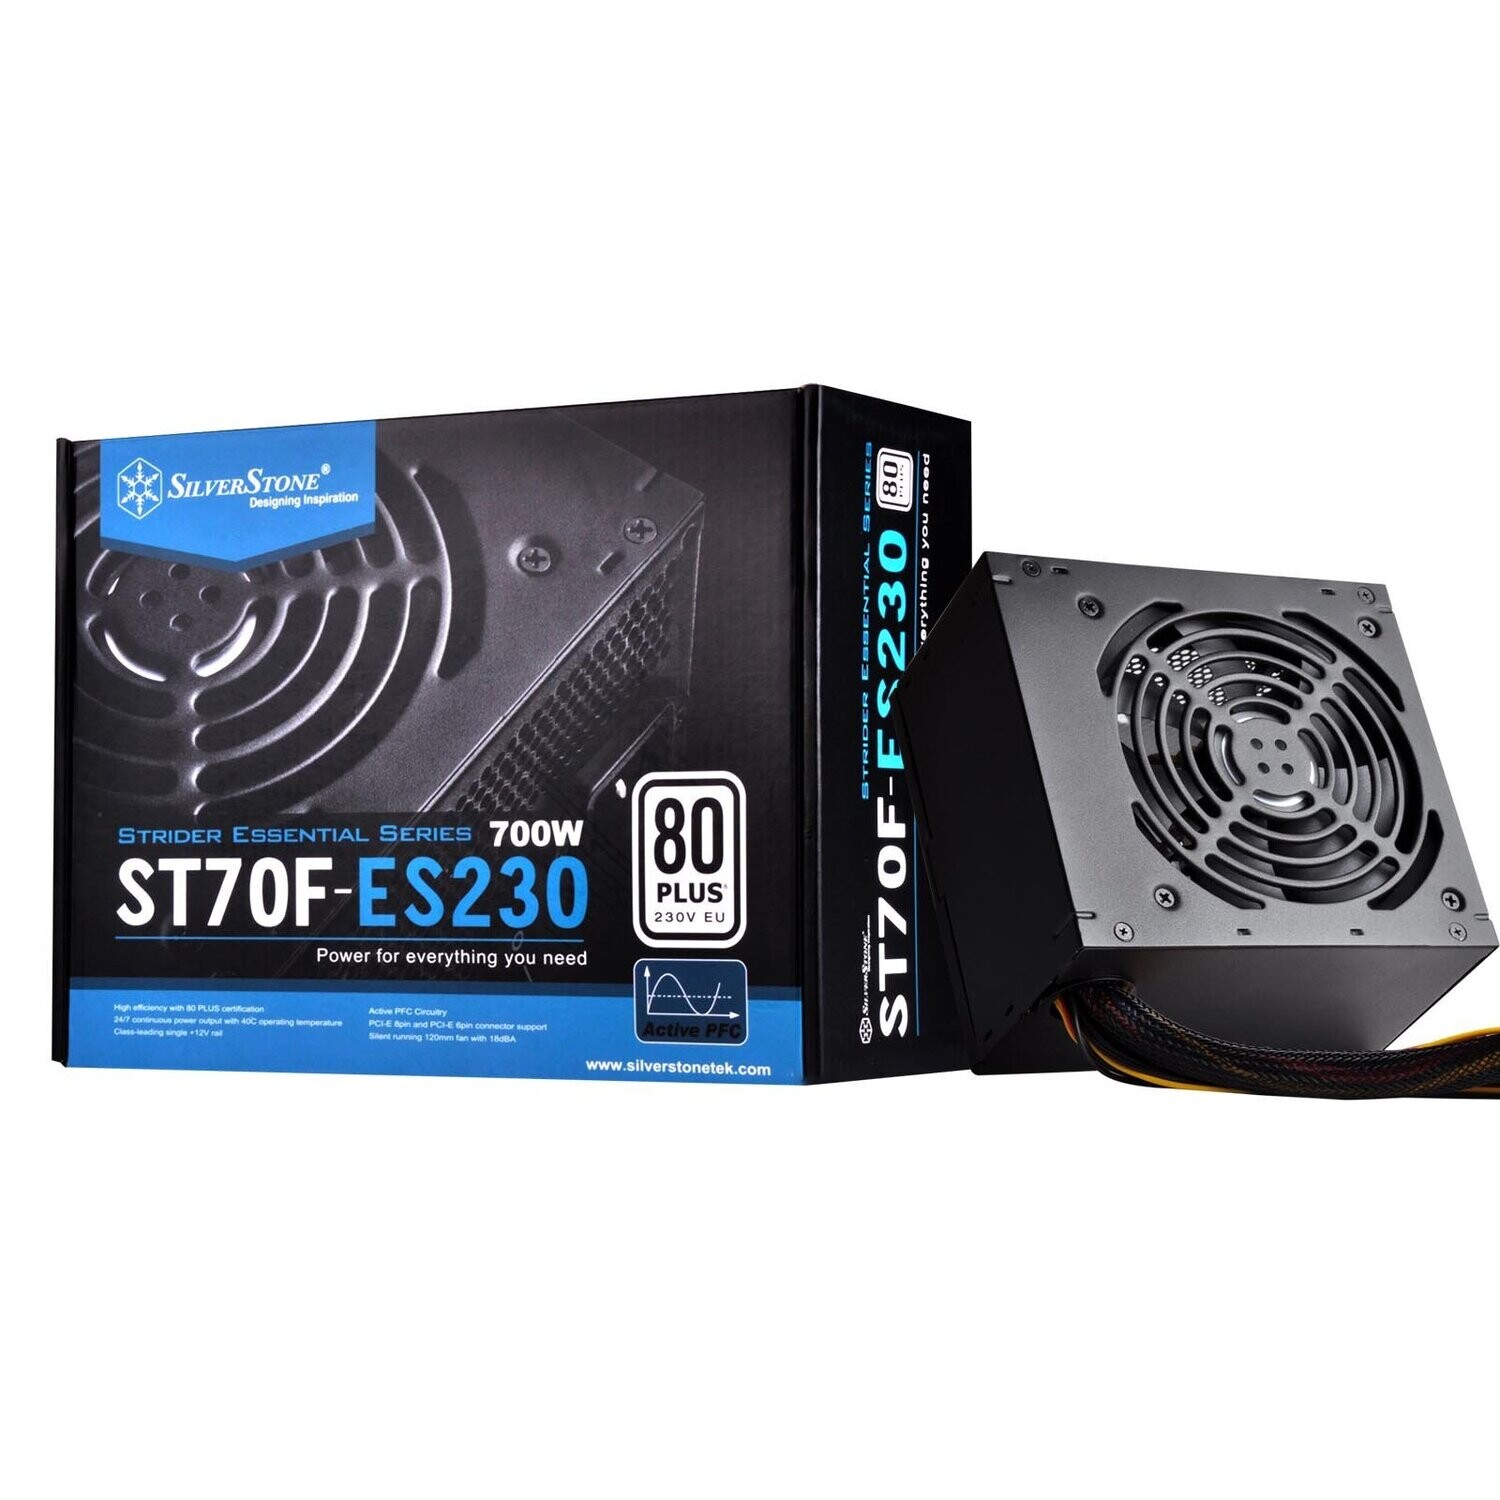 SilverStone Strider Essential Series, 700W 80 Plus 230V EU ATX PC Power Supply, Low Noise 120mm